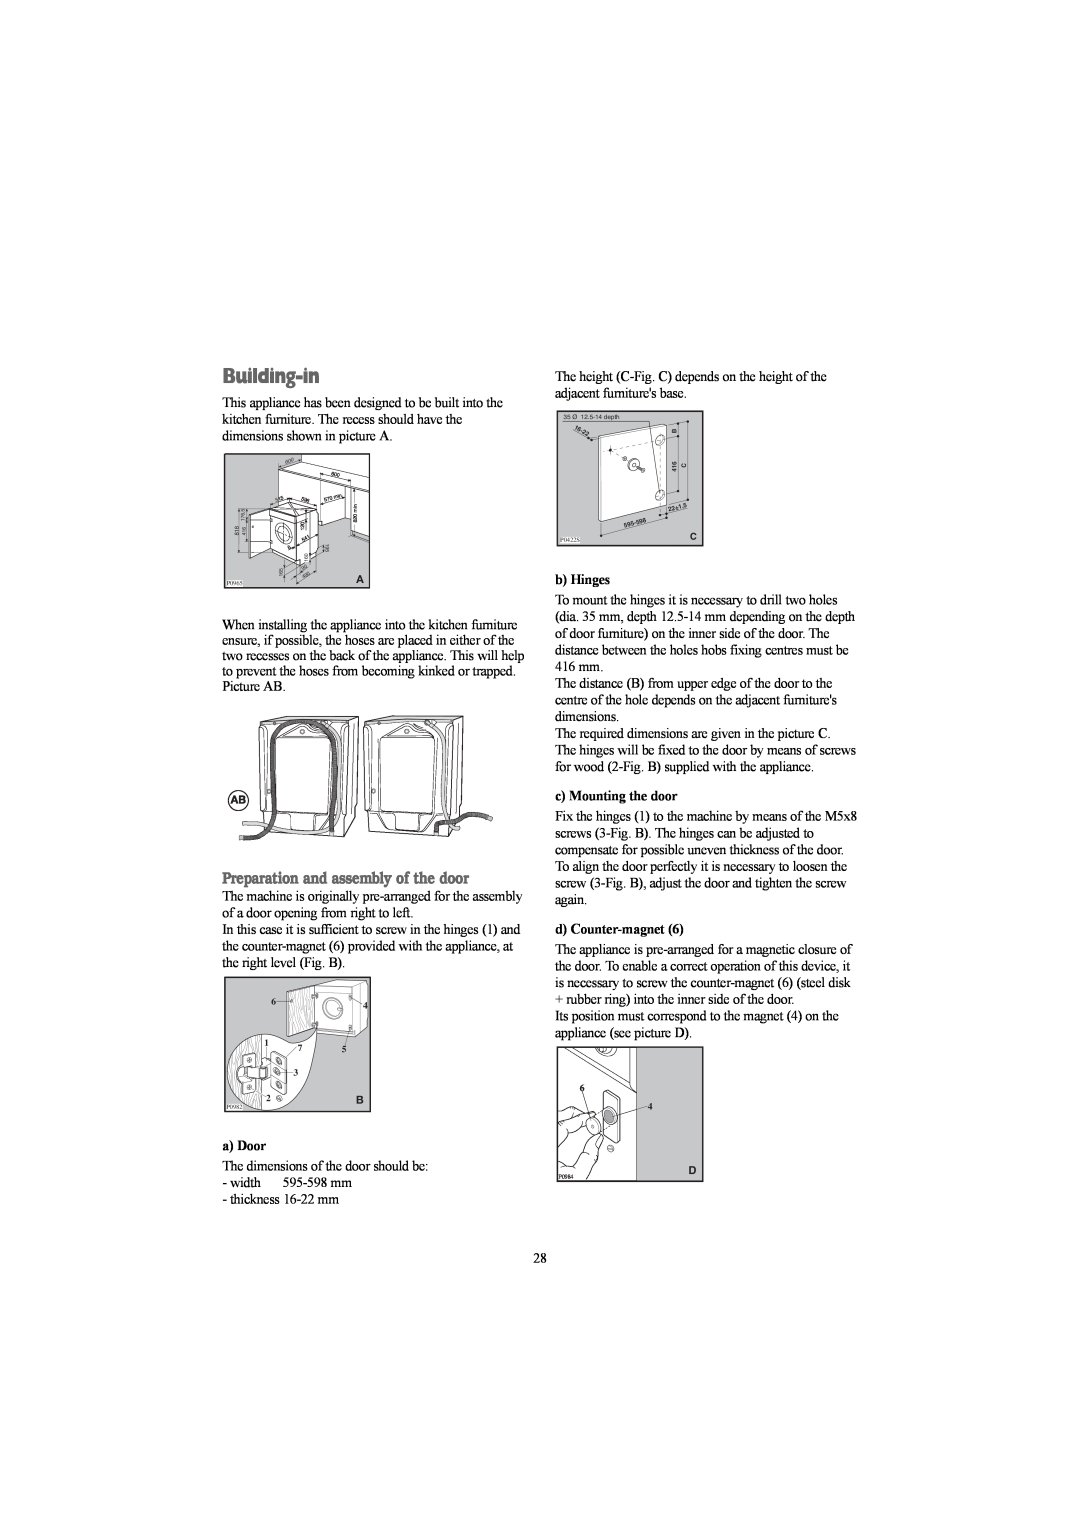 Electrolux EWD 1214 I manual Building-in, a Door, b Hinges, c Mounting the door, d Counter-magnet 